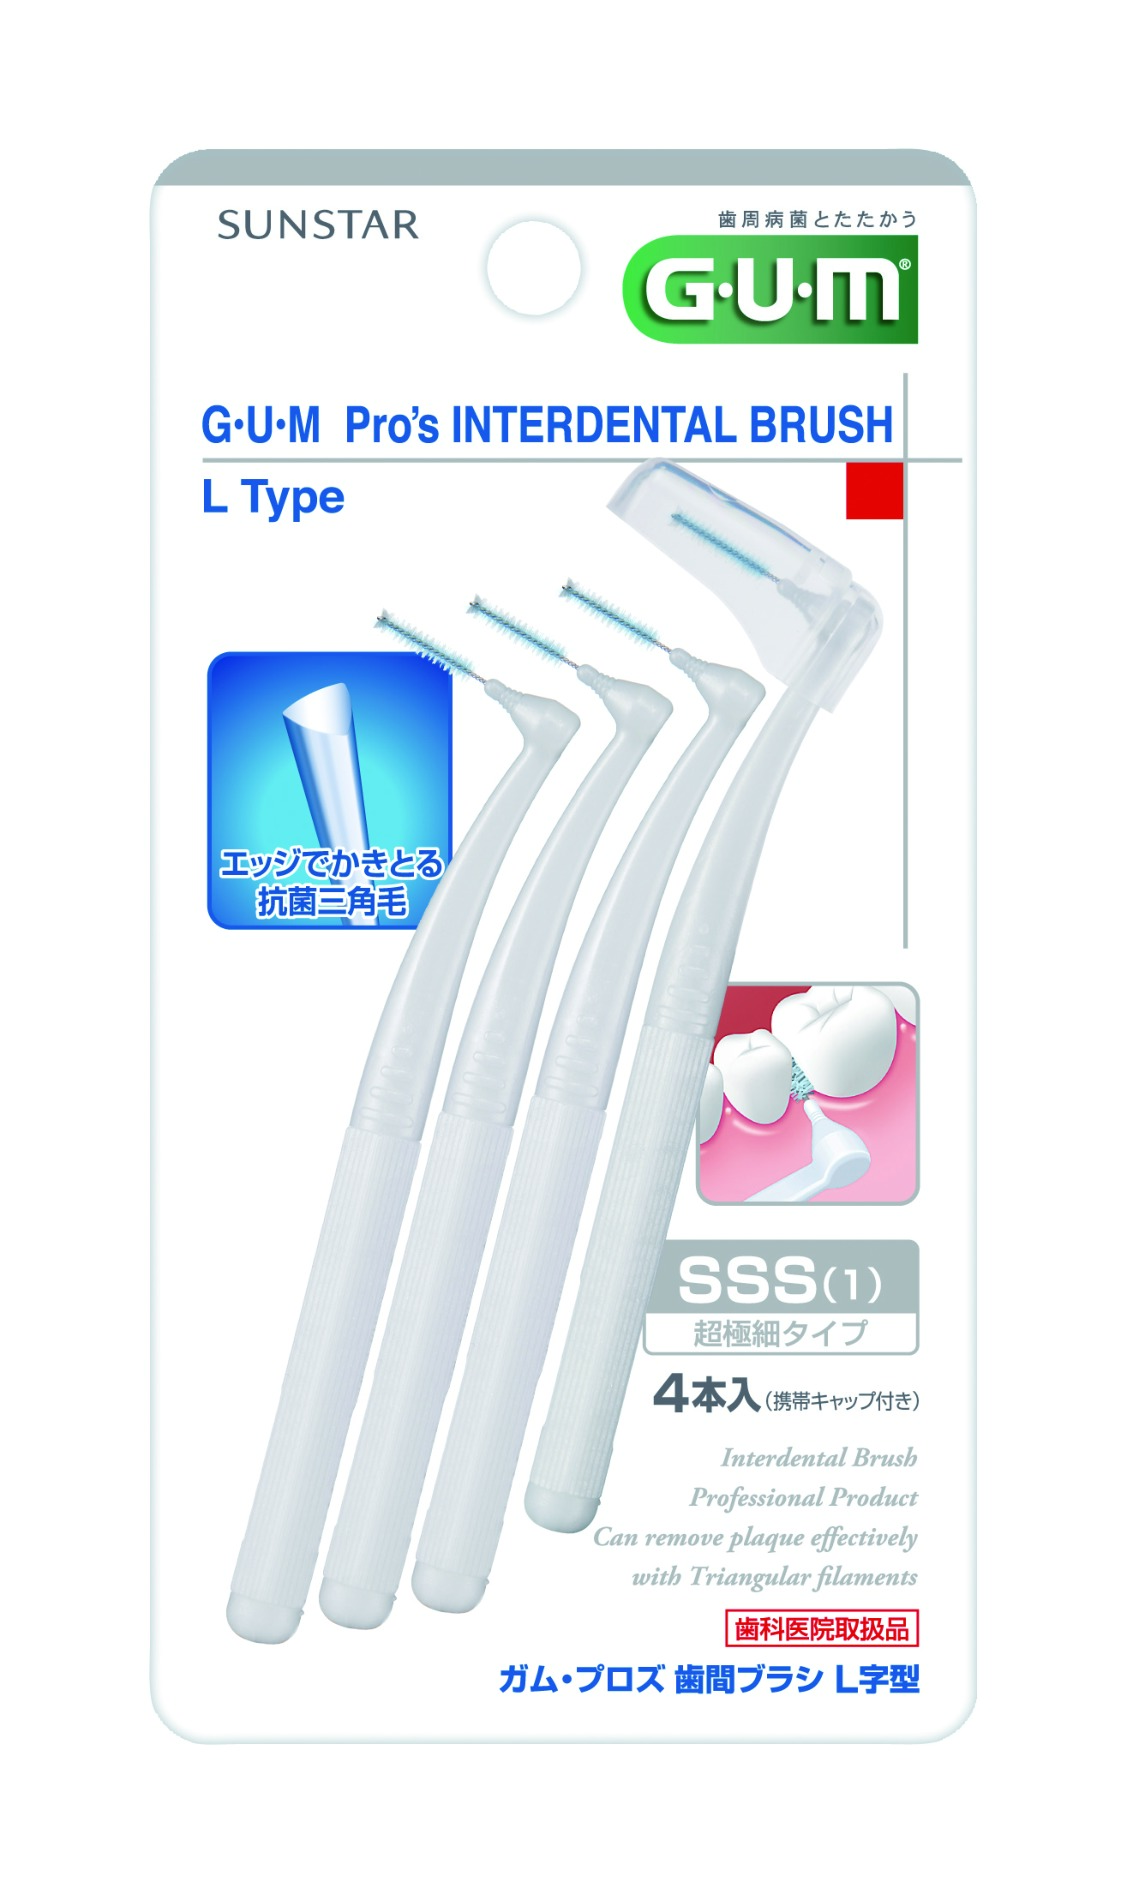 GUM Pro’s Interdental Brush (L-Type)